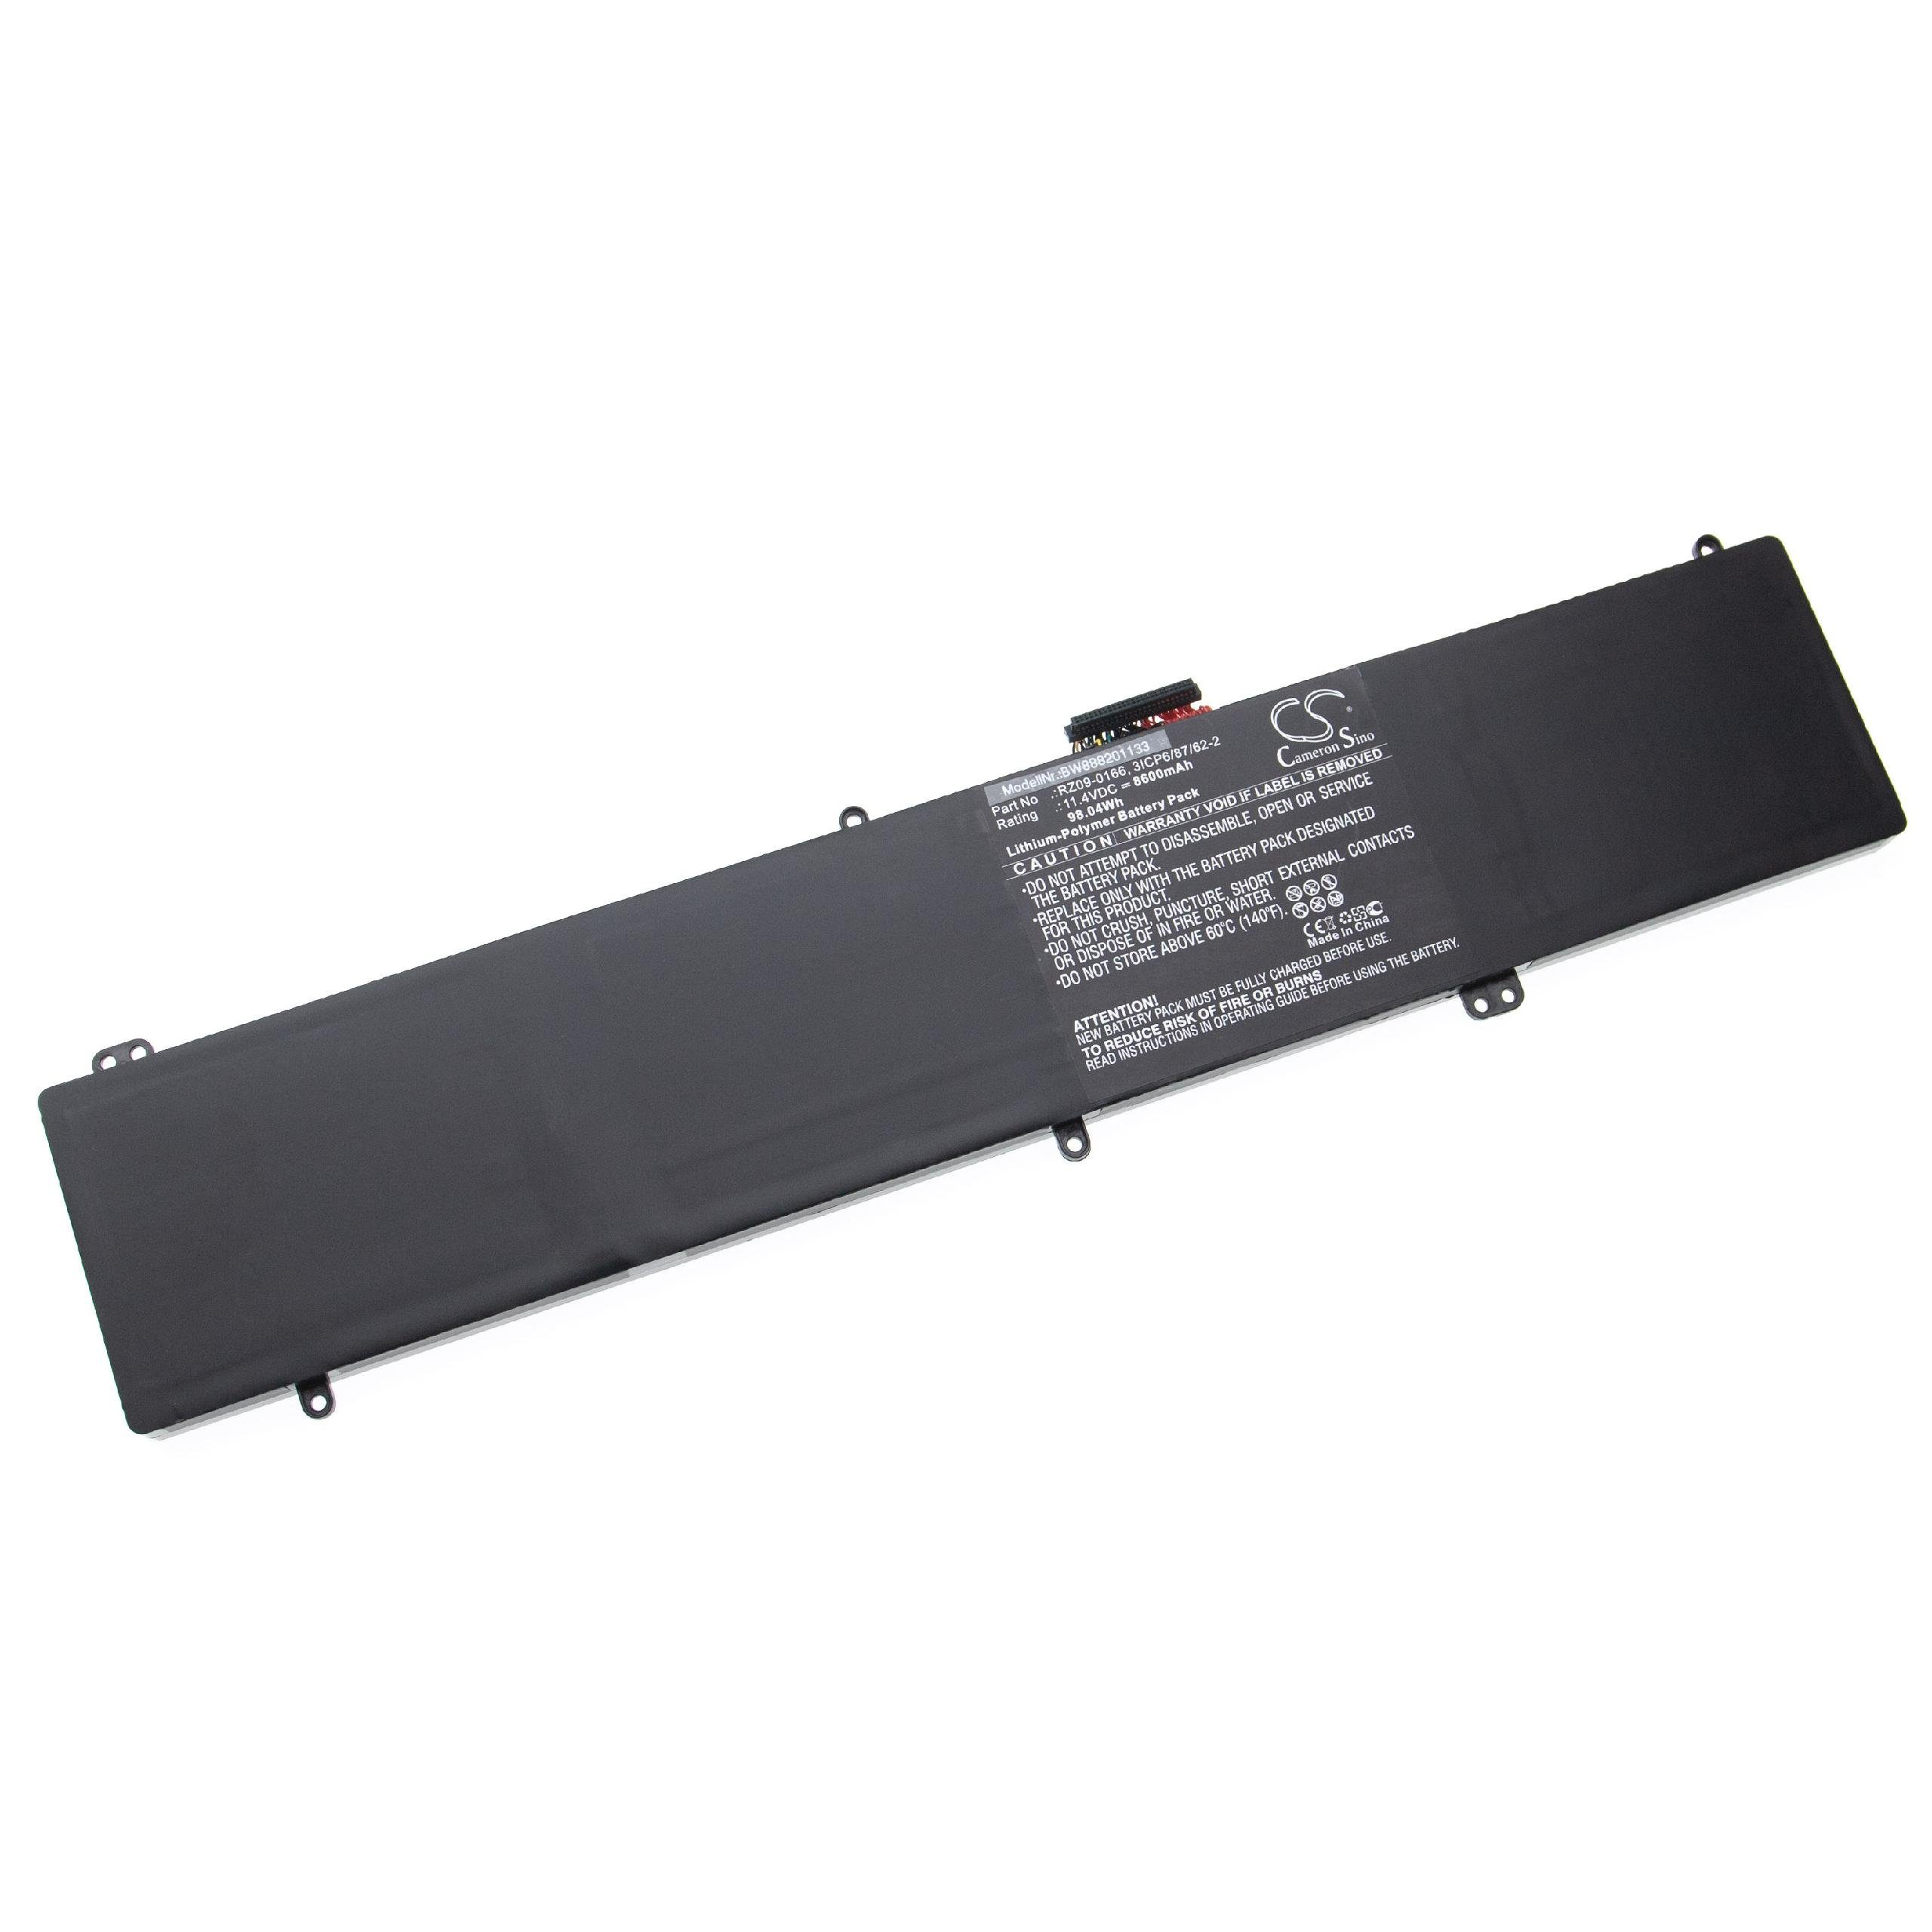 vhbw kompatibel mit Razer Blade RZ09-01663E54-R3B1, RZ09-01663E54-R3U1 Laptop-Akku Li-Polymer 8600 mAh (11,4 V) | Akkus und PowerBanks